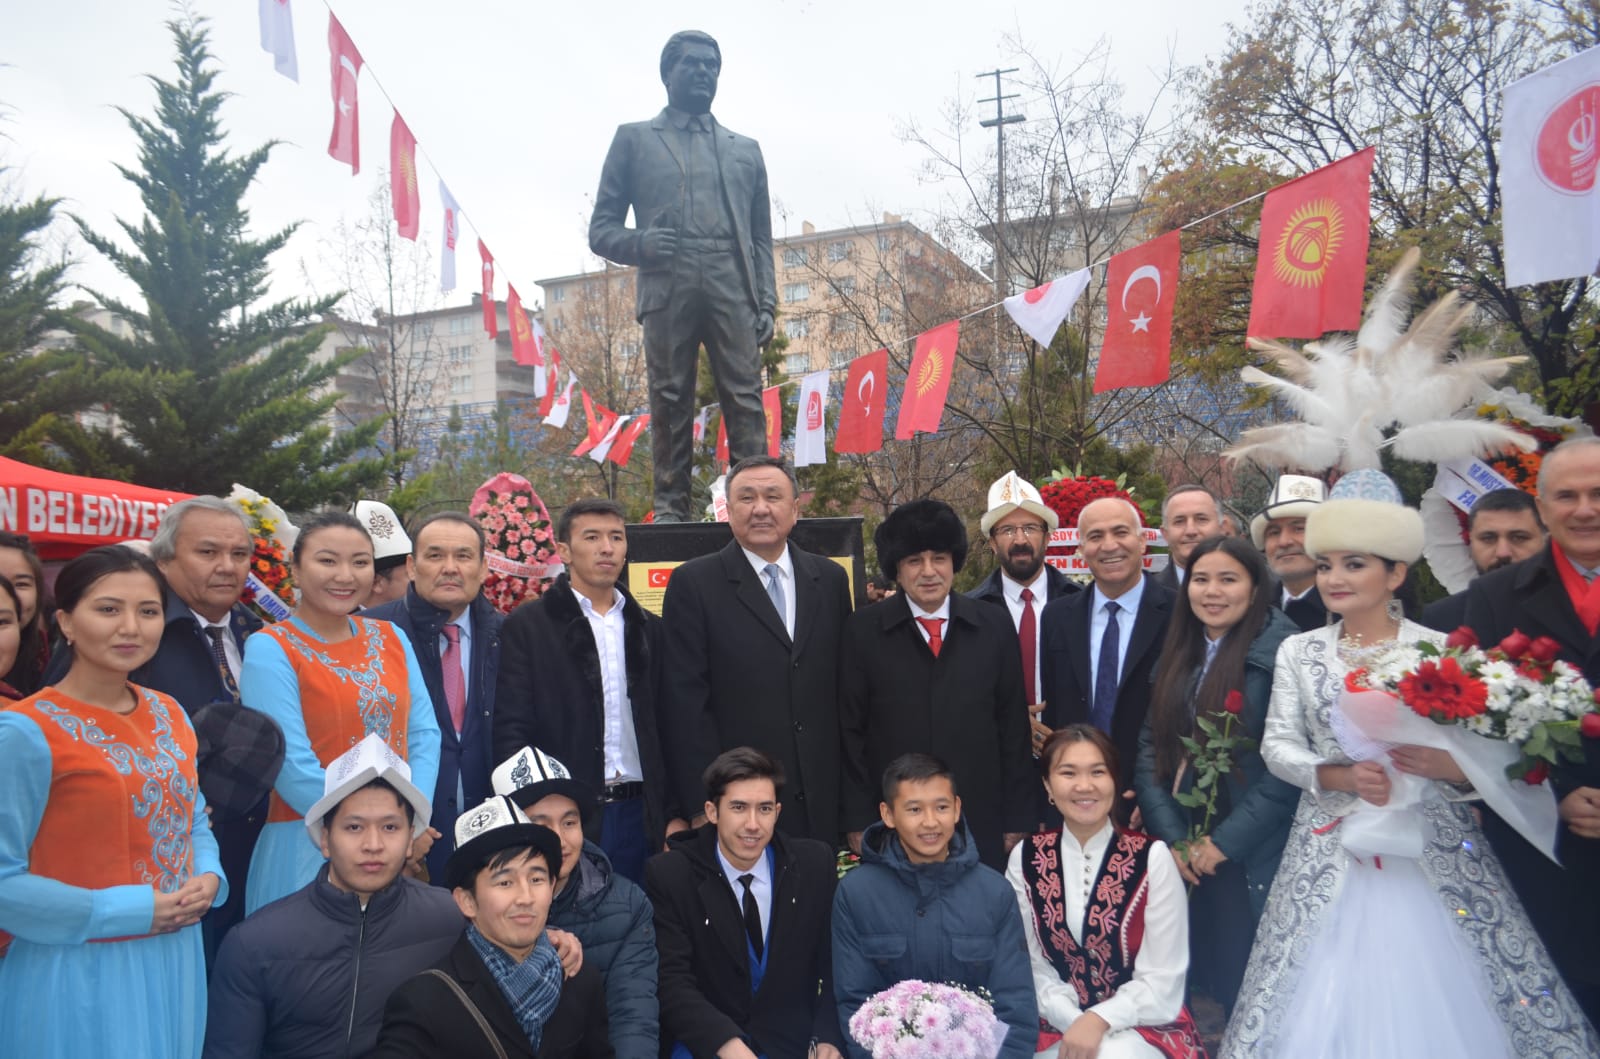 2019-12-12 Opening ceremony of the monument of Chingiz Aitmatov in Ankara